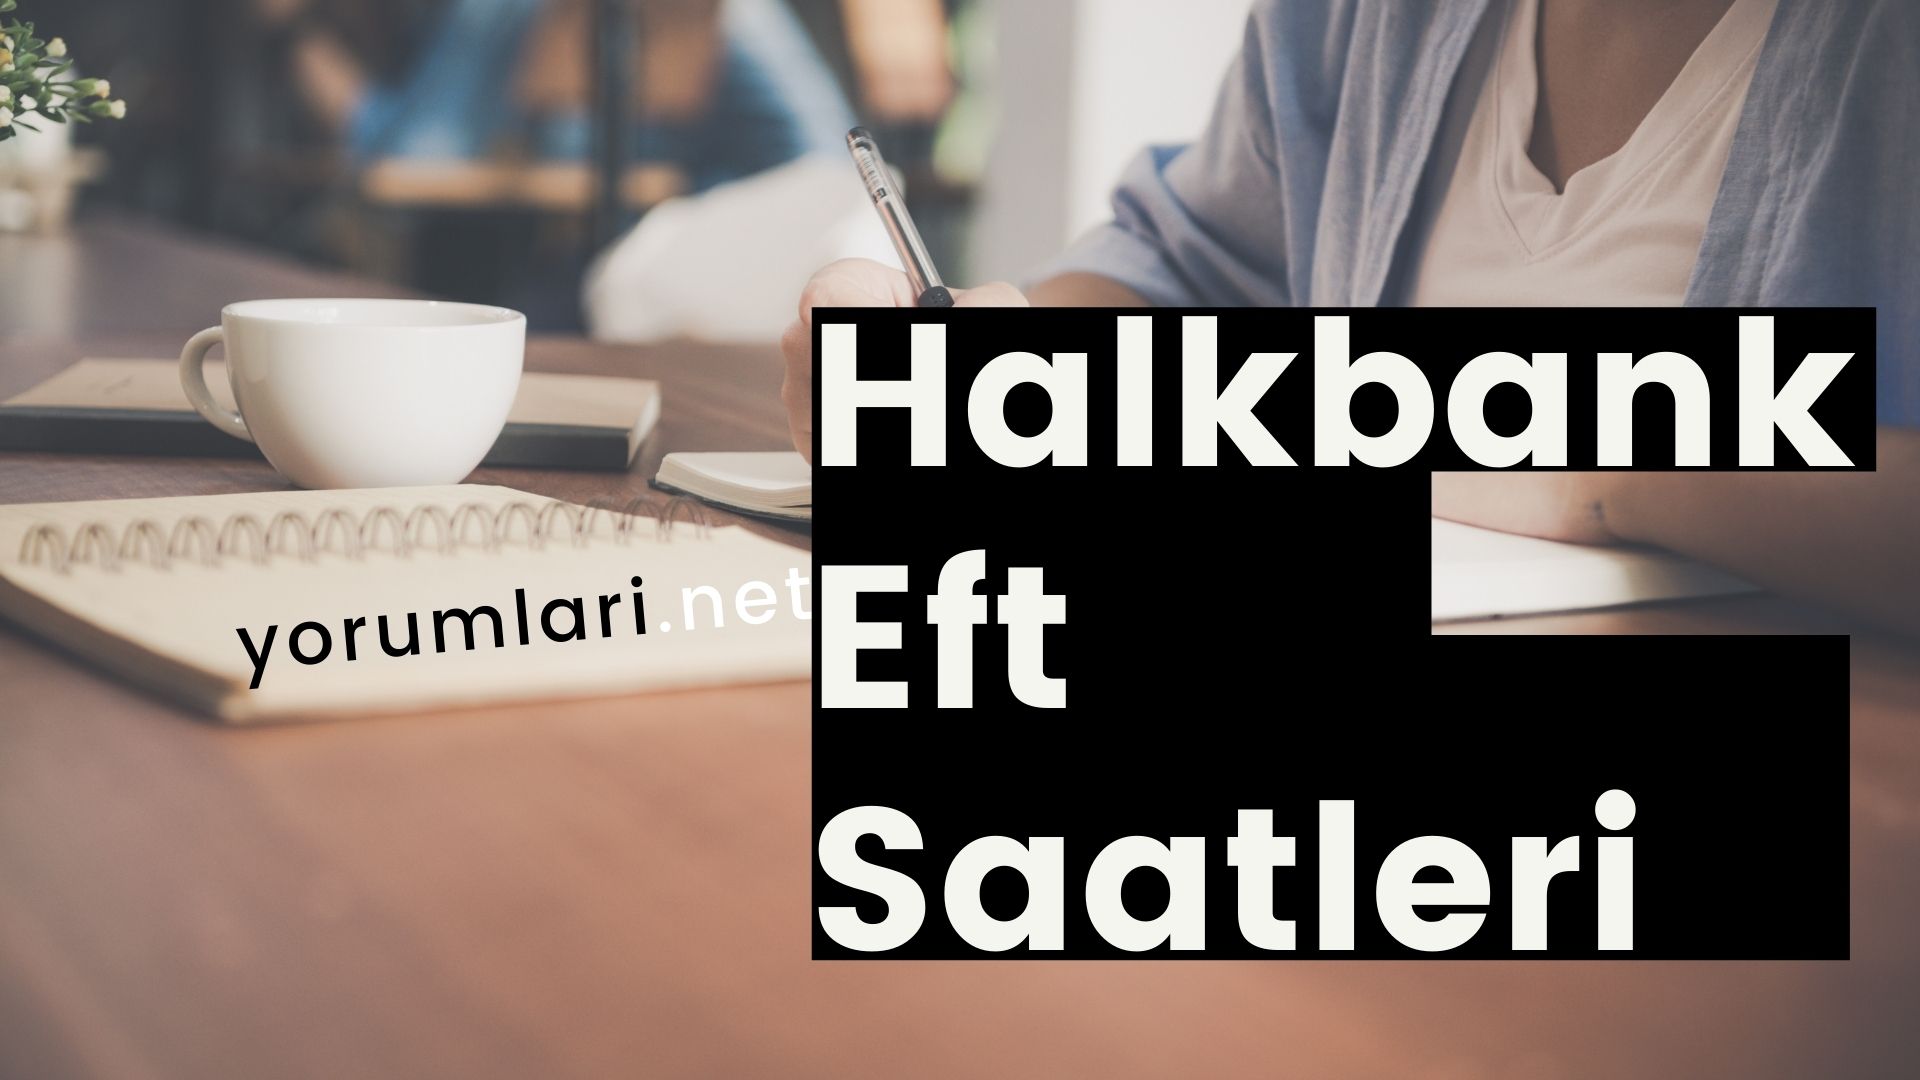 Halkbank Eft Saatleri | Halkbank EFT Saatleri Hafta Sonu